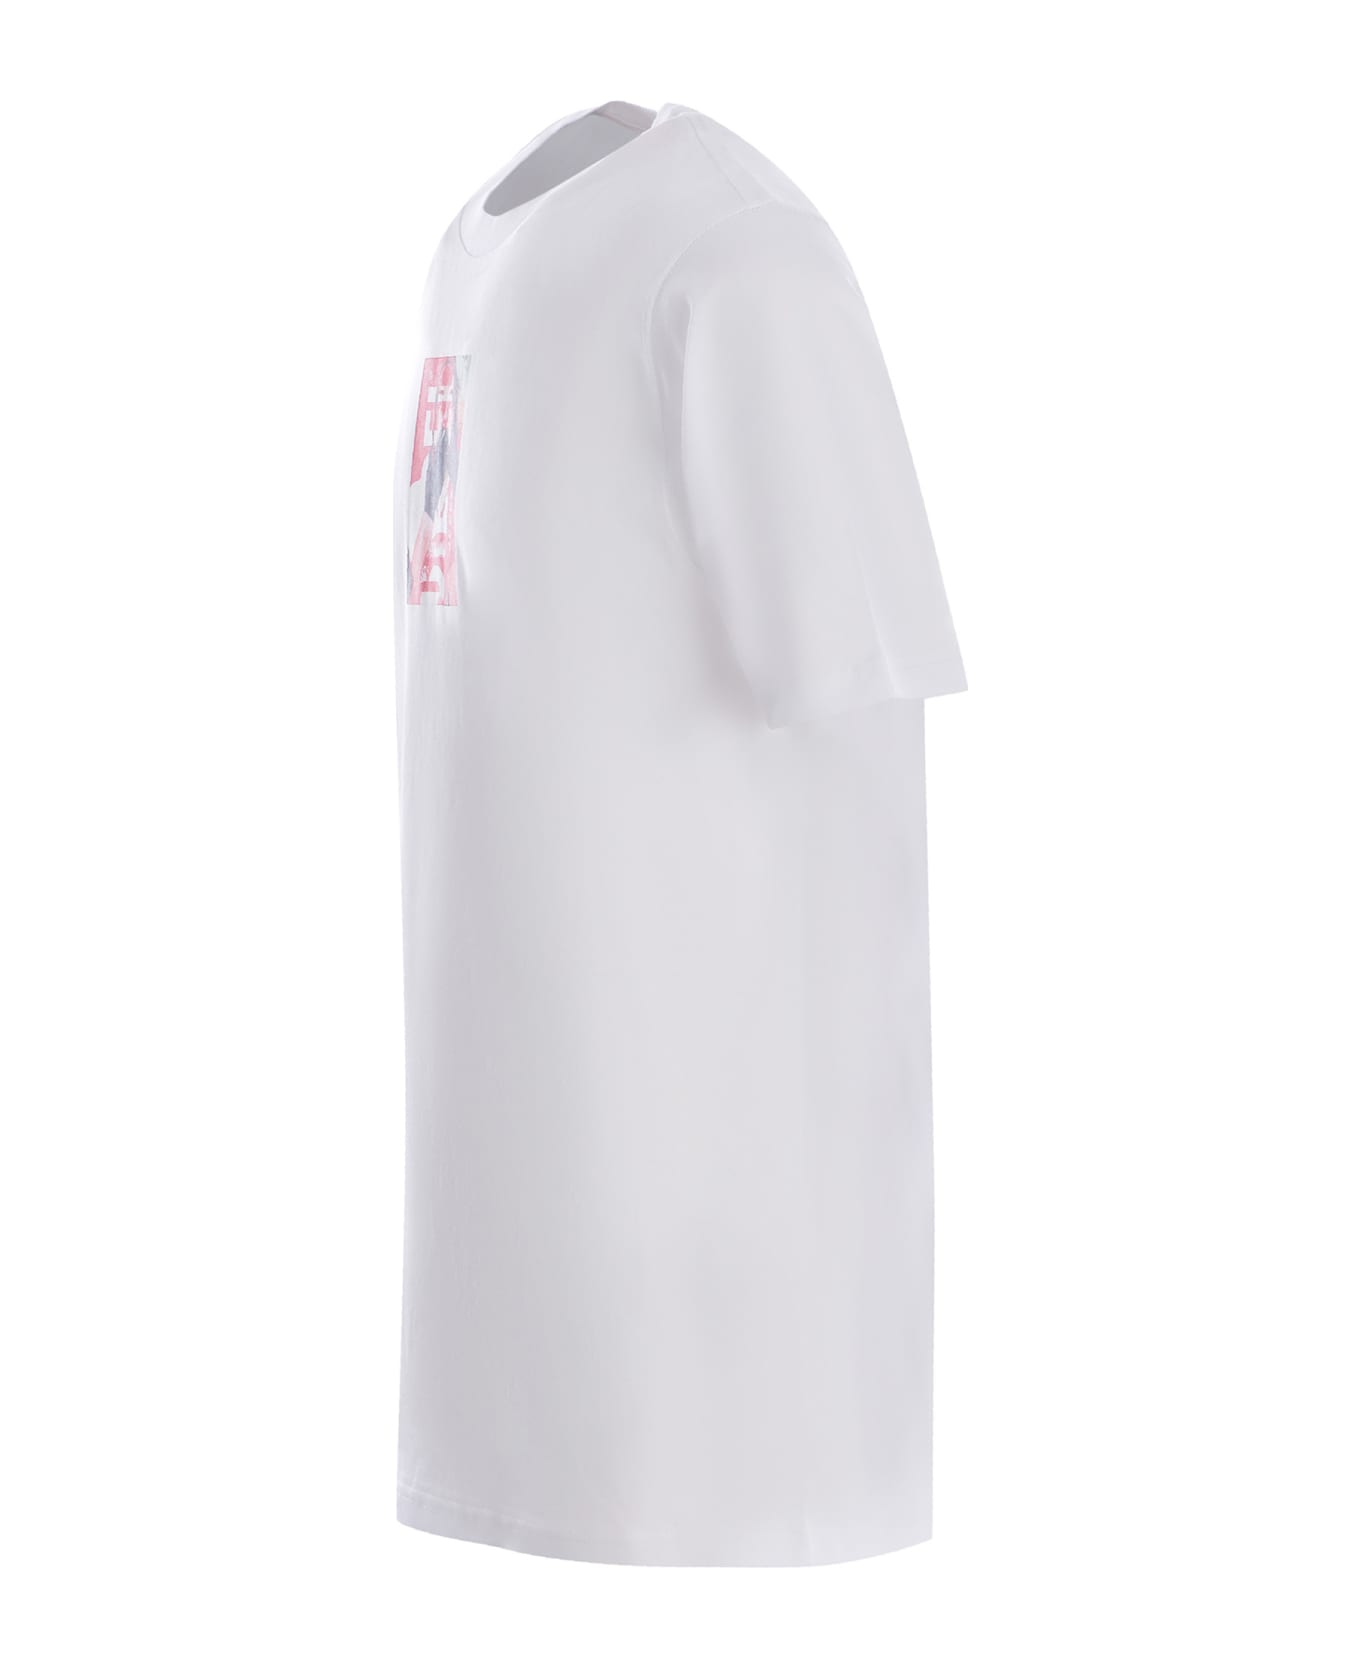 Diesel T-shirt Diesel "t-just-n11" Made Of Cotton Jersey - Bianco